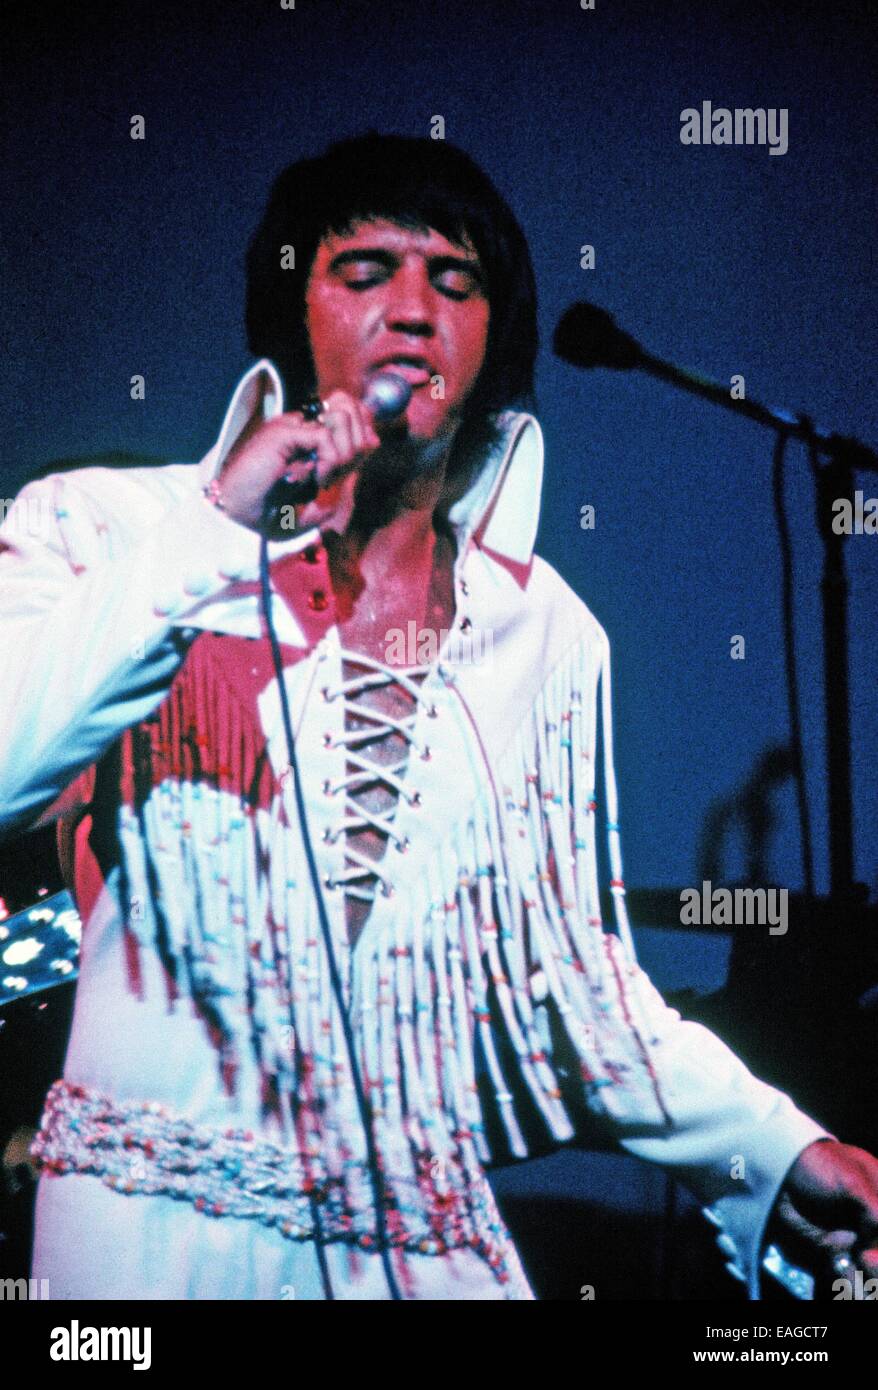 Elvis 1970s vegas stock photography images - Alamy